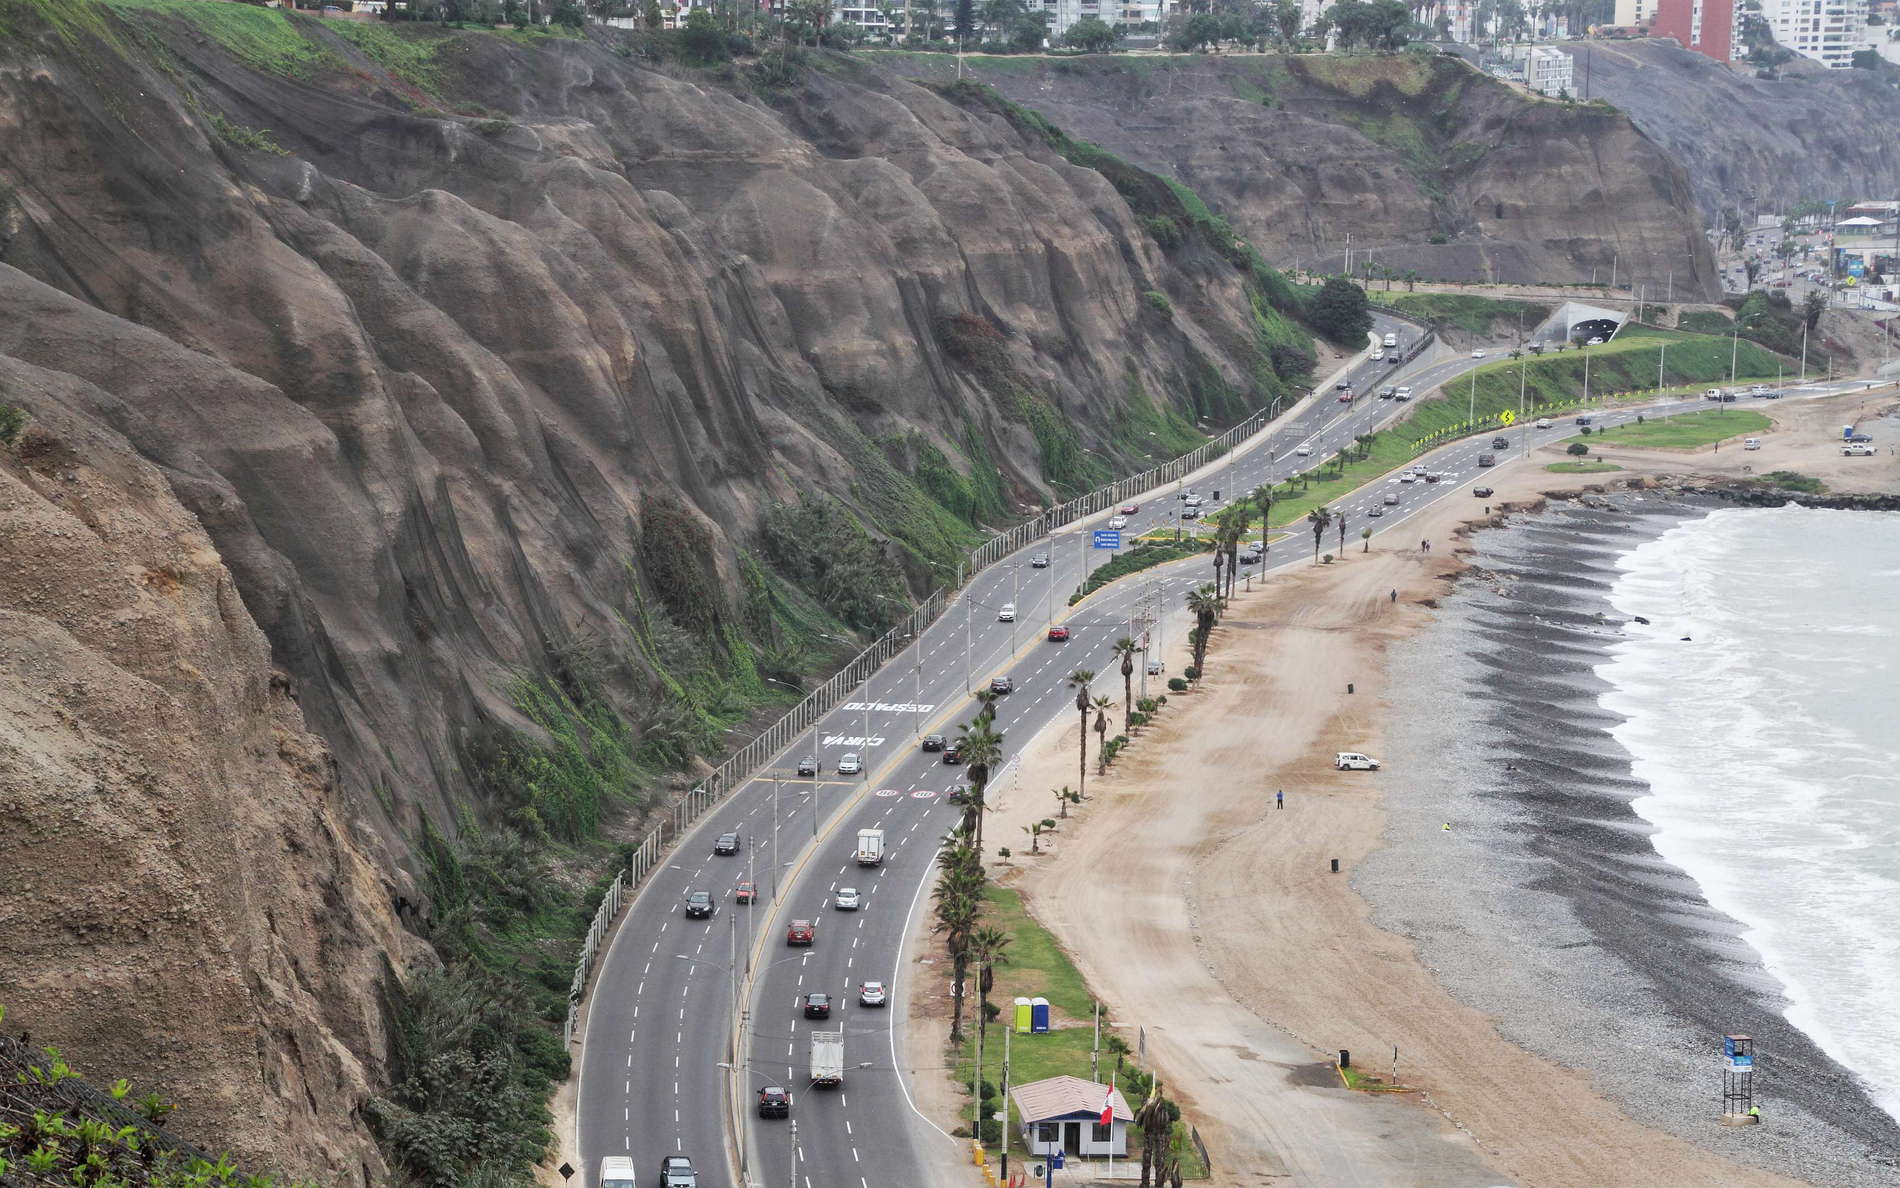 Lima | Miraflores with Costa Verde